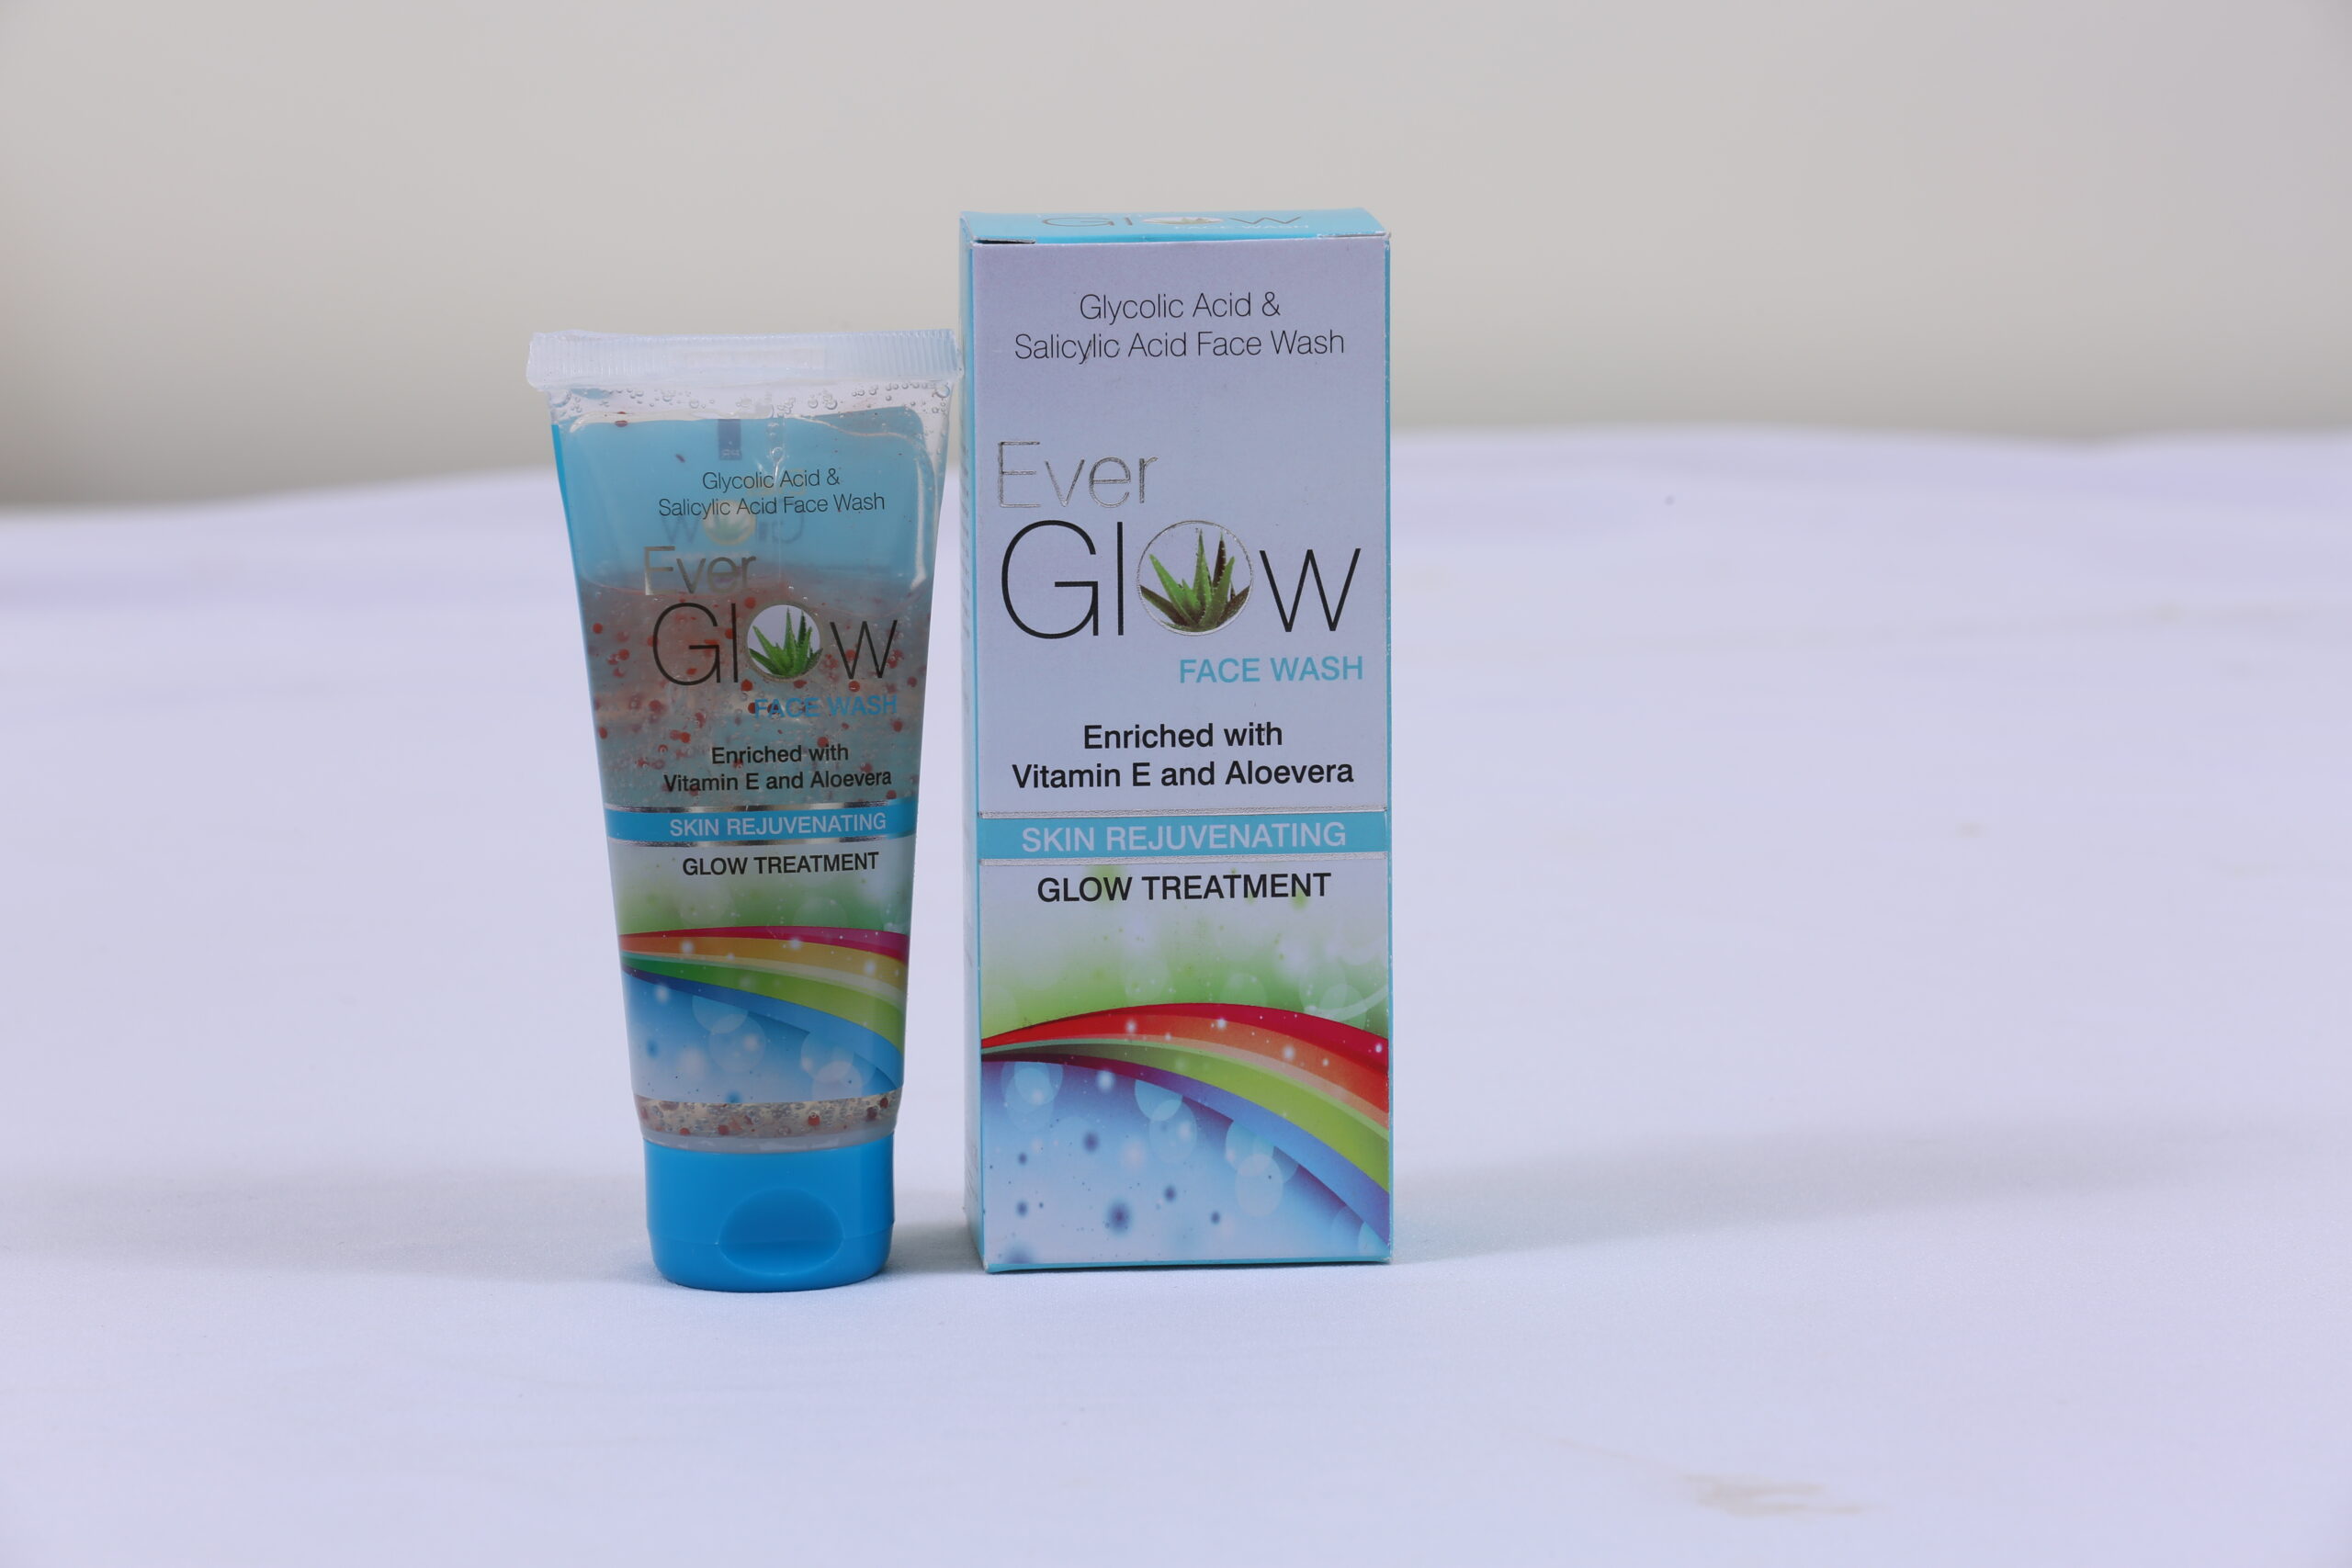 EVERGLOW FACEWASH (Glycolic Acid + Aloe Vera Extracts Gel Base Face Wash)